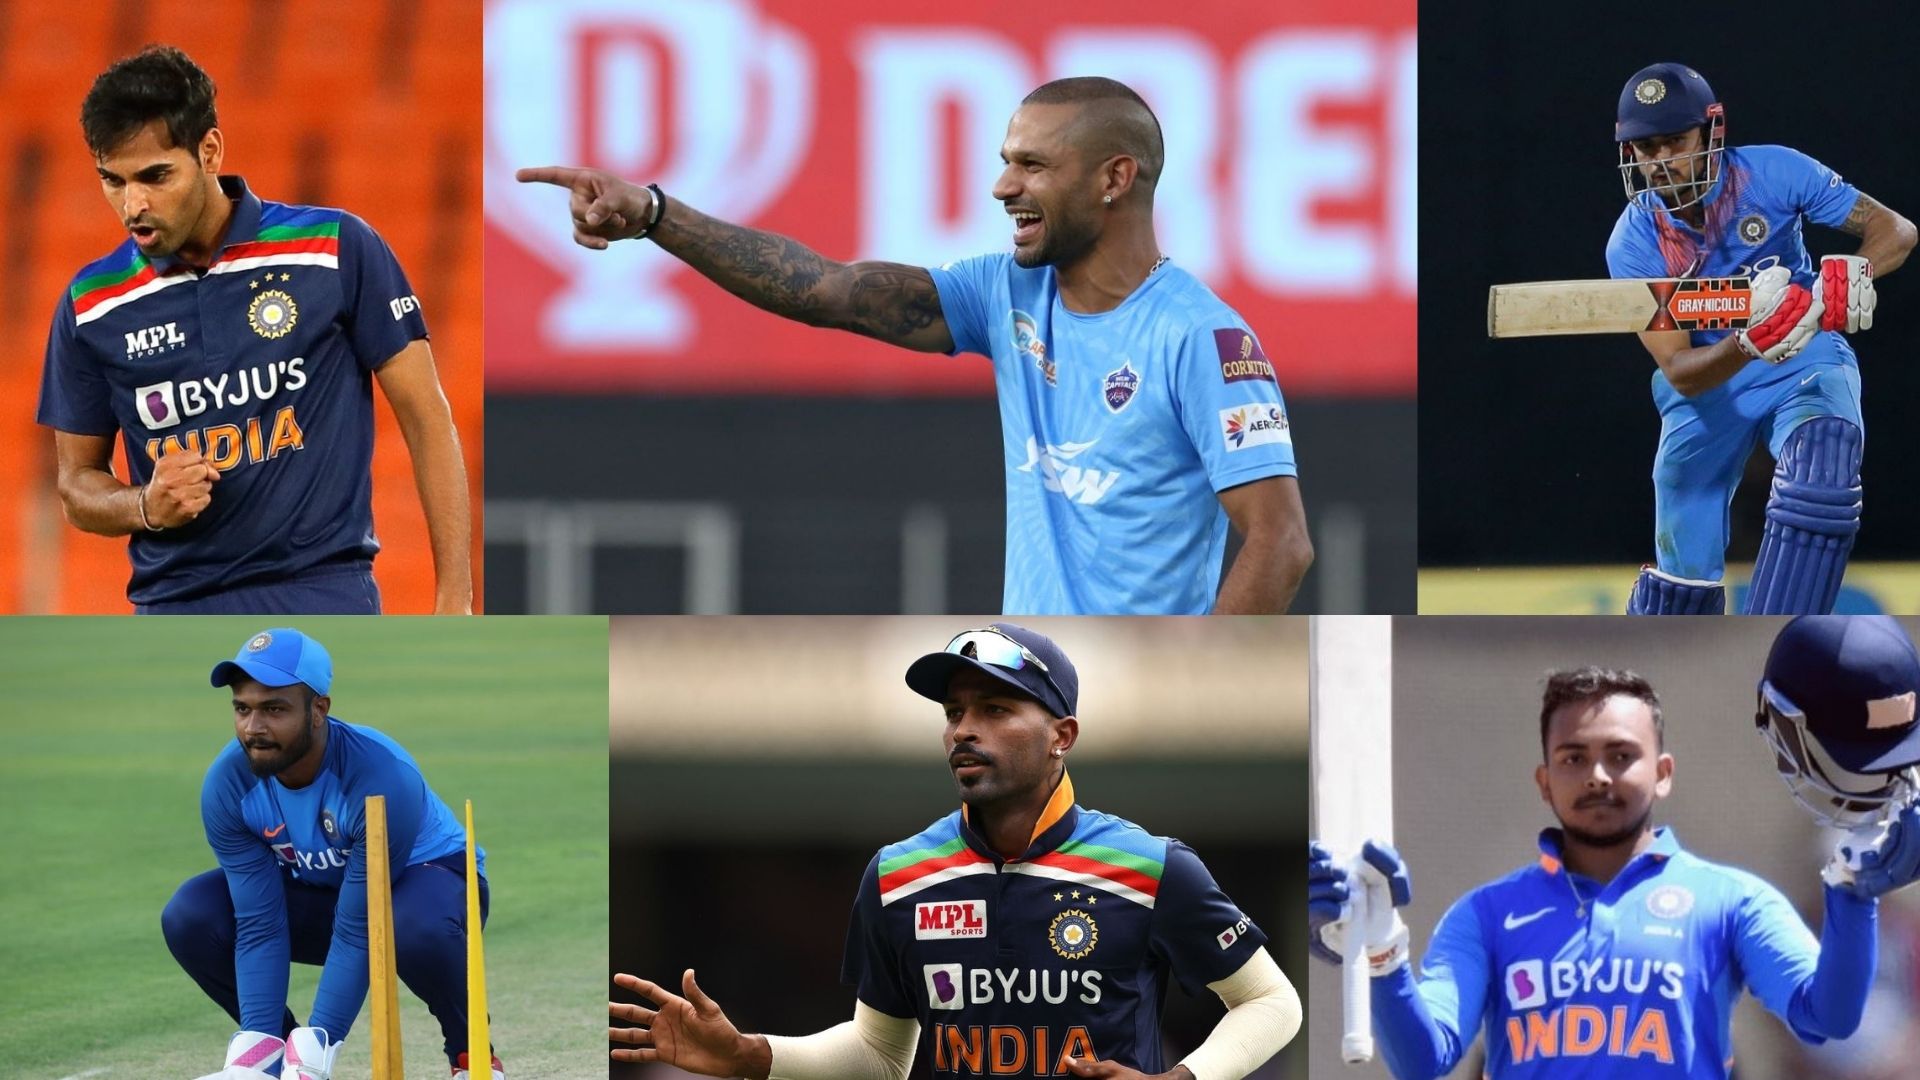 T20 World Cup squad  Sri Lanka series India's tour of Sri Lanka in July to comprise three ODIs, three T20Is India's B team